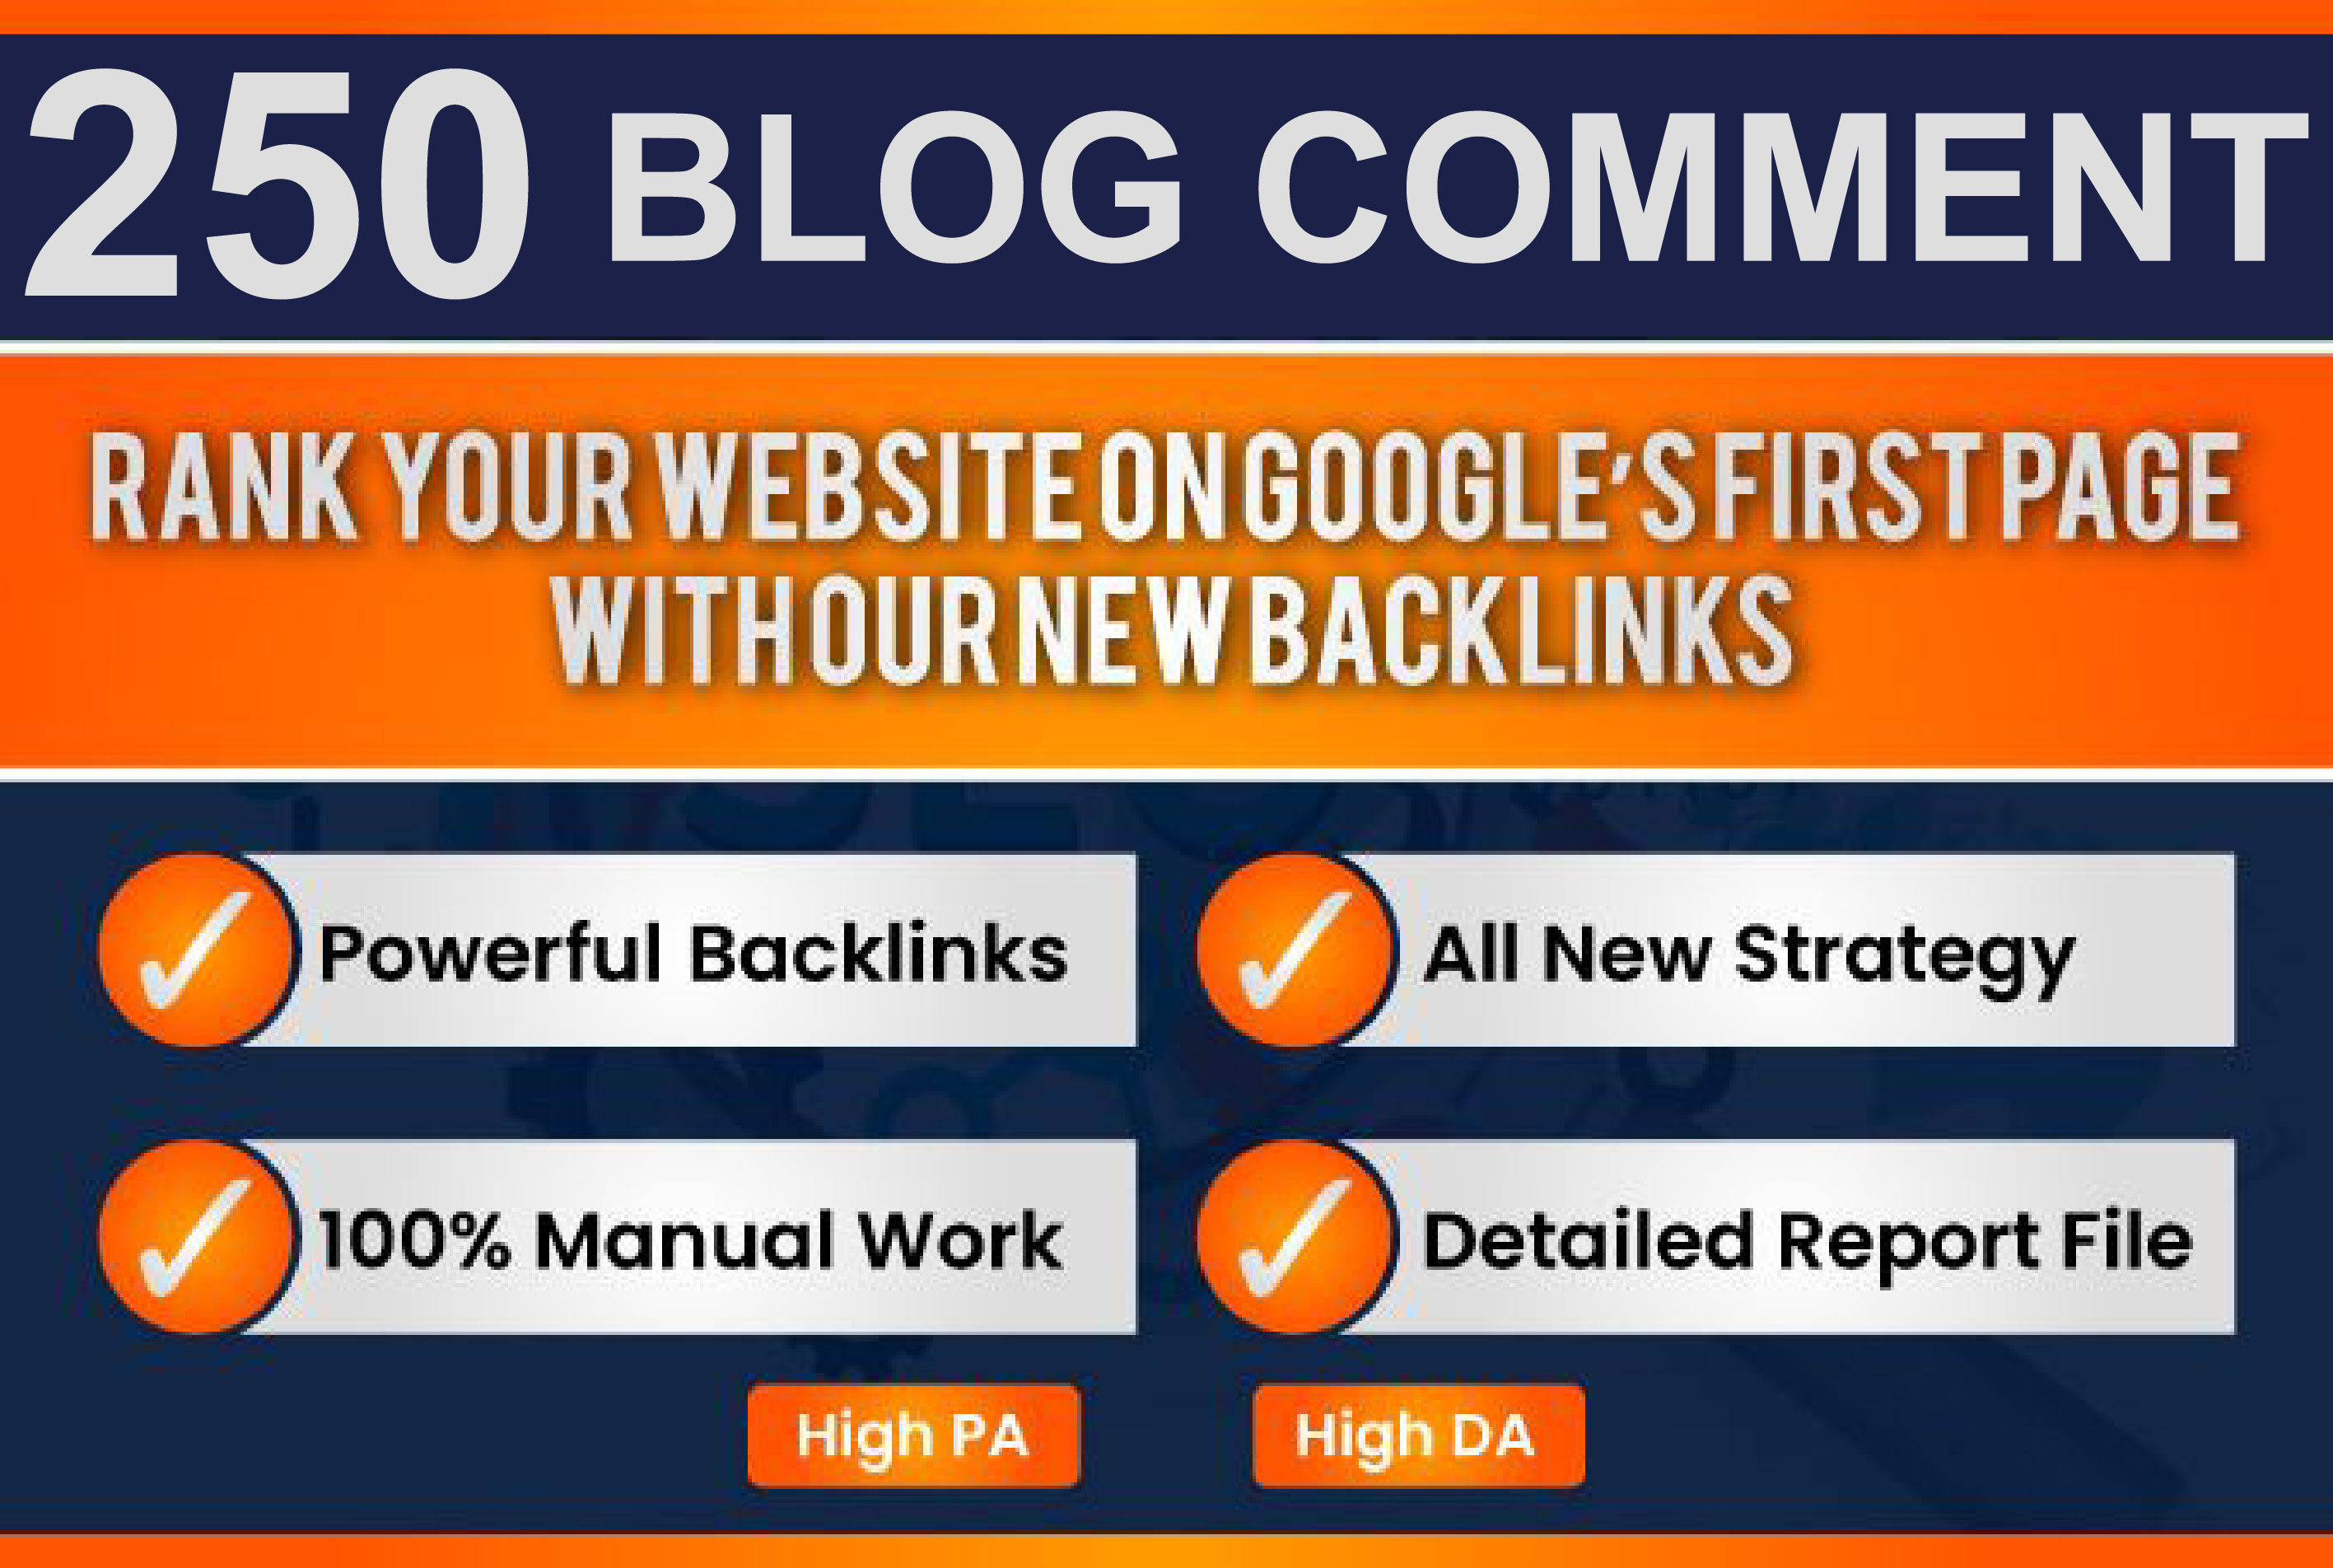 BUY 2 GET 1 FREE Build 250 Do-follow Blog Comments Backlinks on High DA PA Websites 